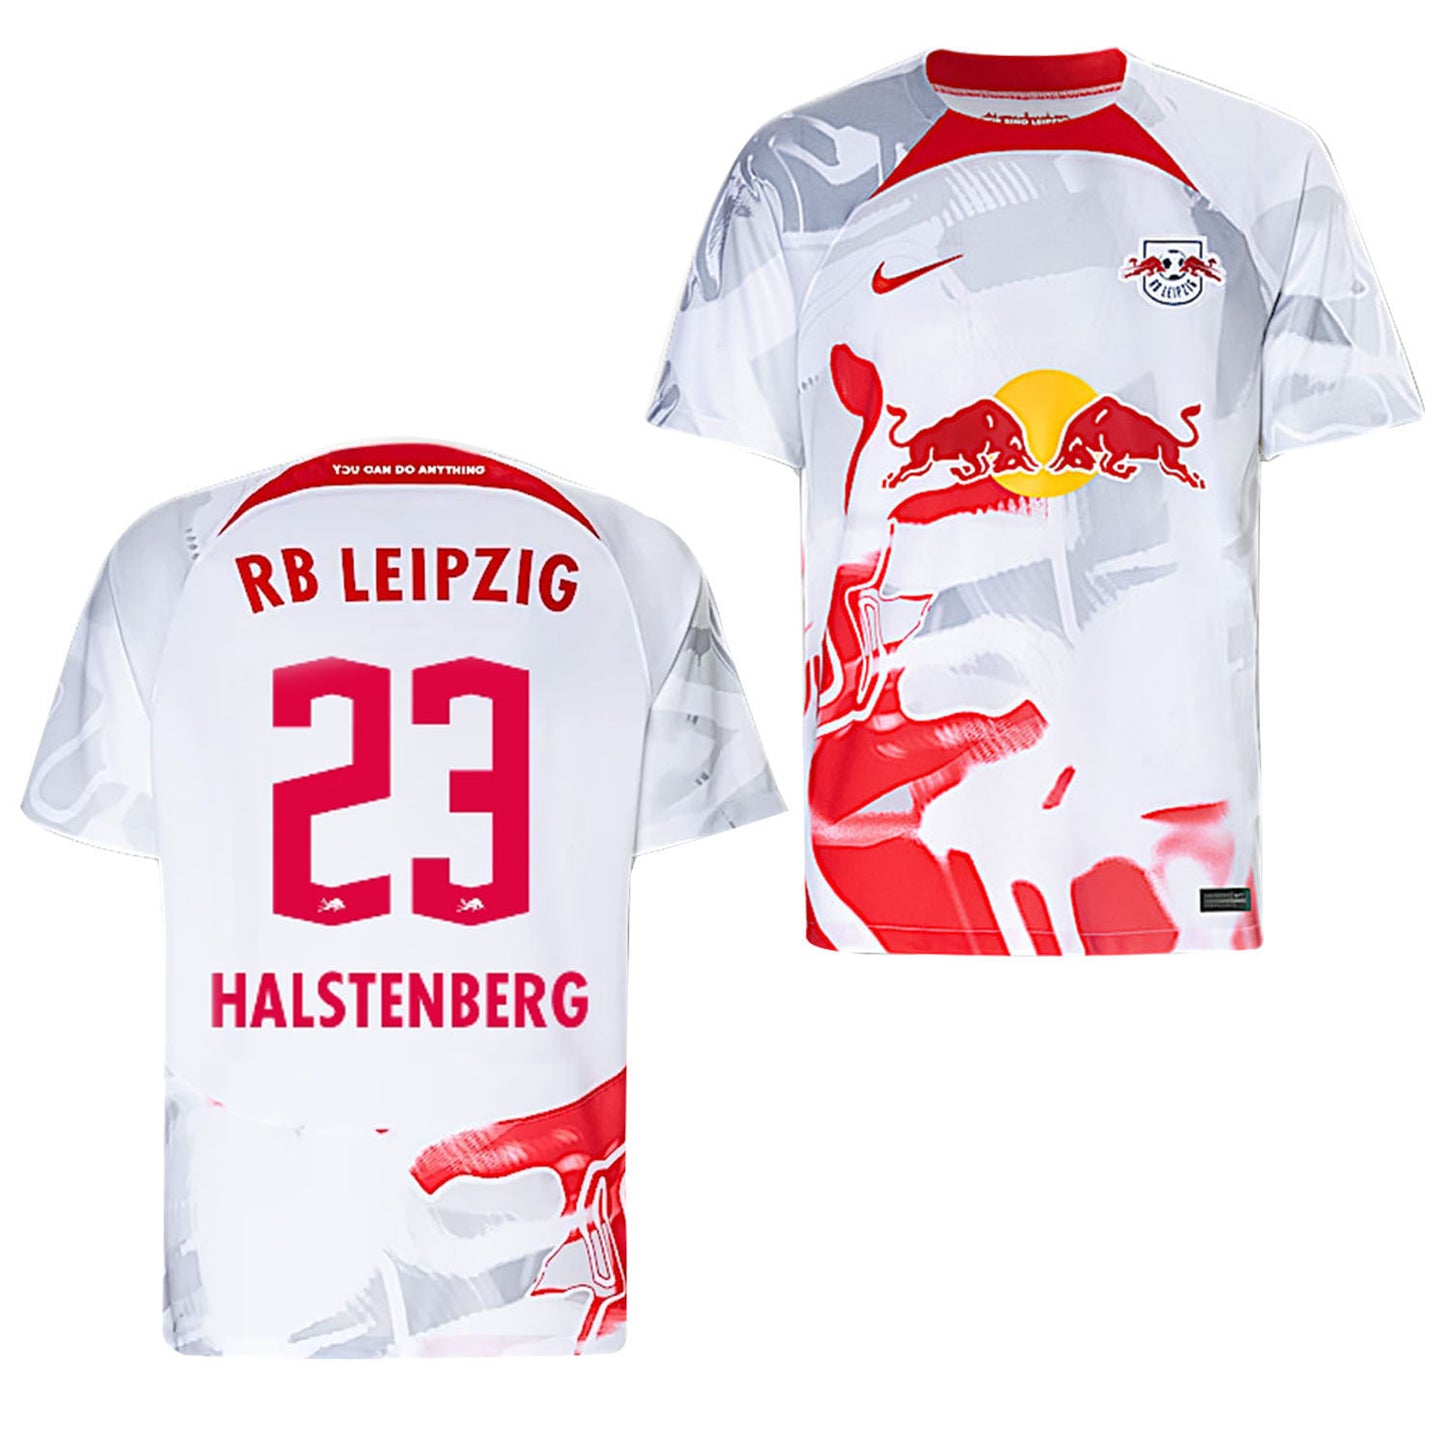 Marcel Halstenberg RB Leipzig 23 Jersey